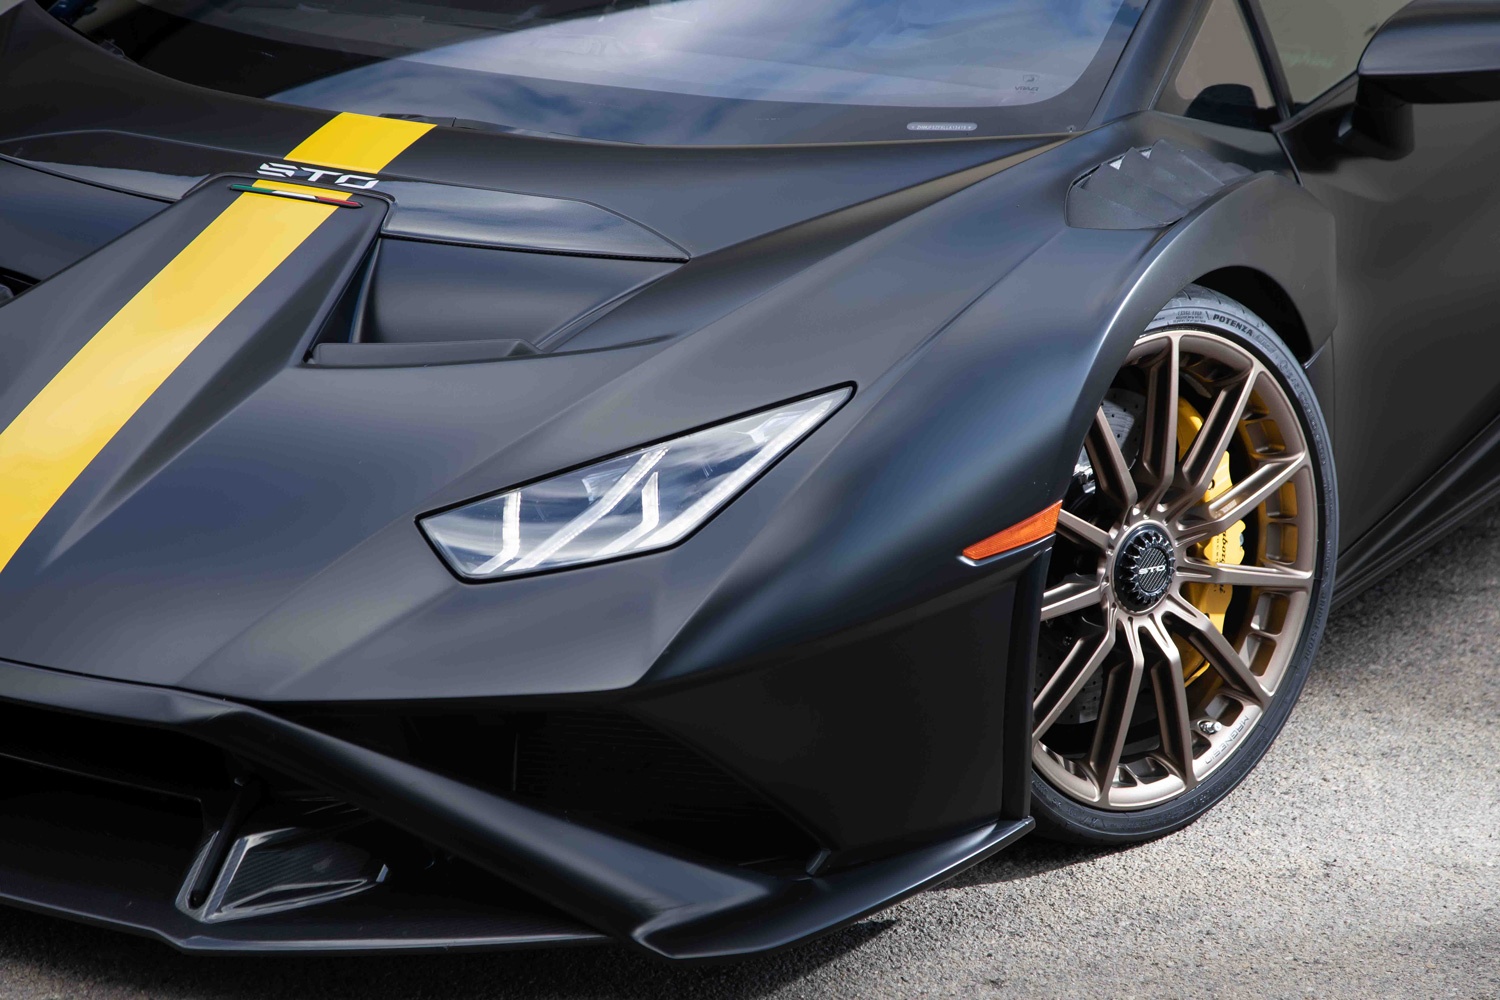 Bridgestone partners with Lamborghini to develop bespoke Potenza Race tyre for Huracán STO supercar